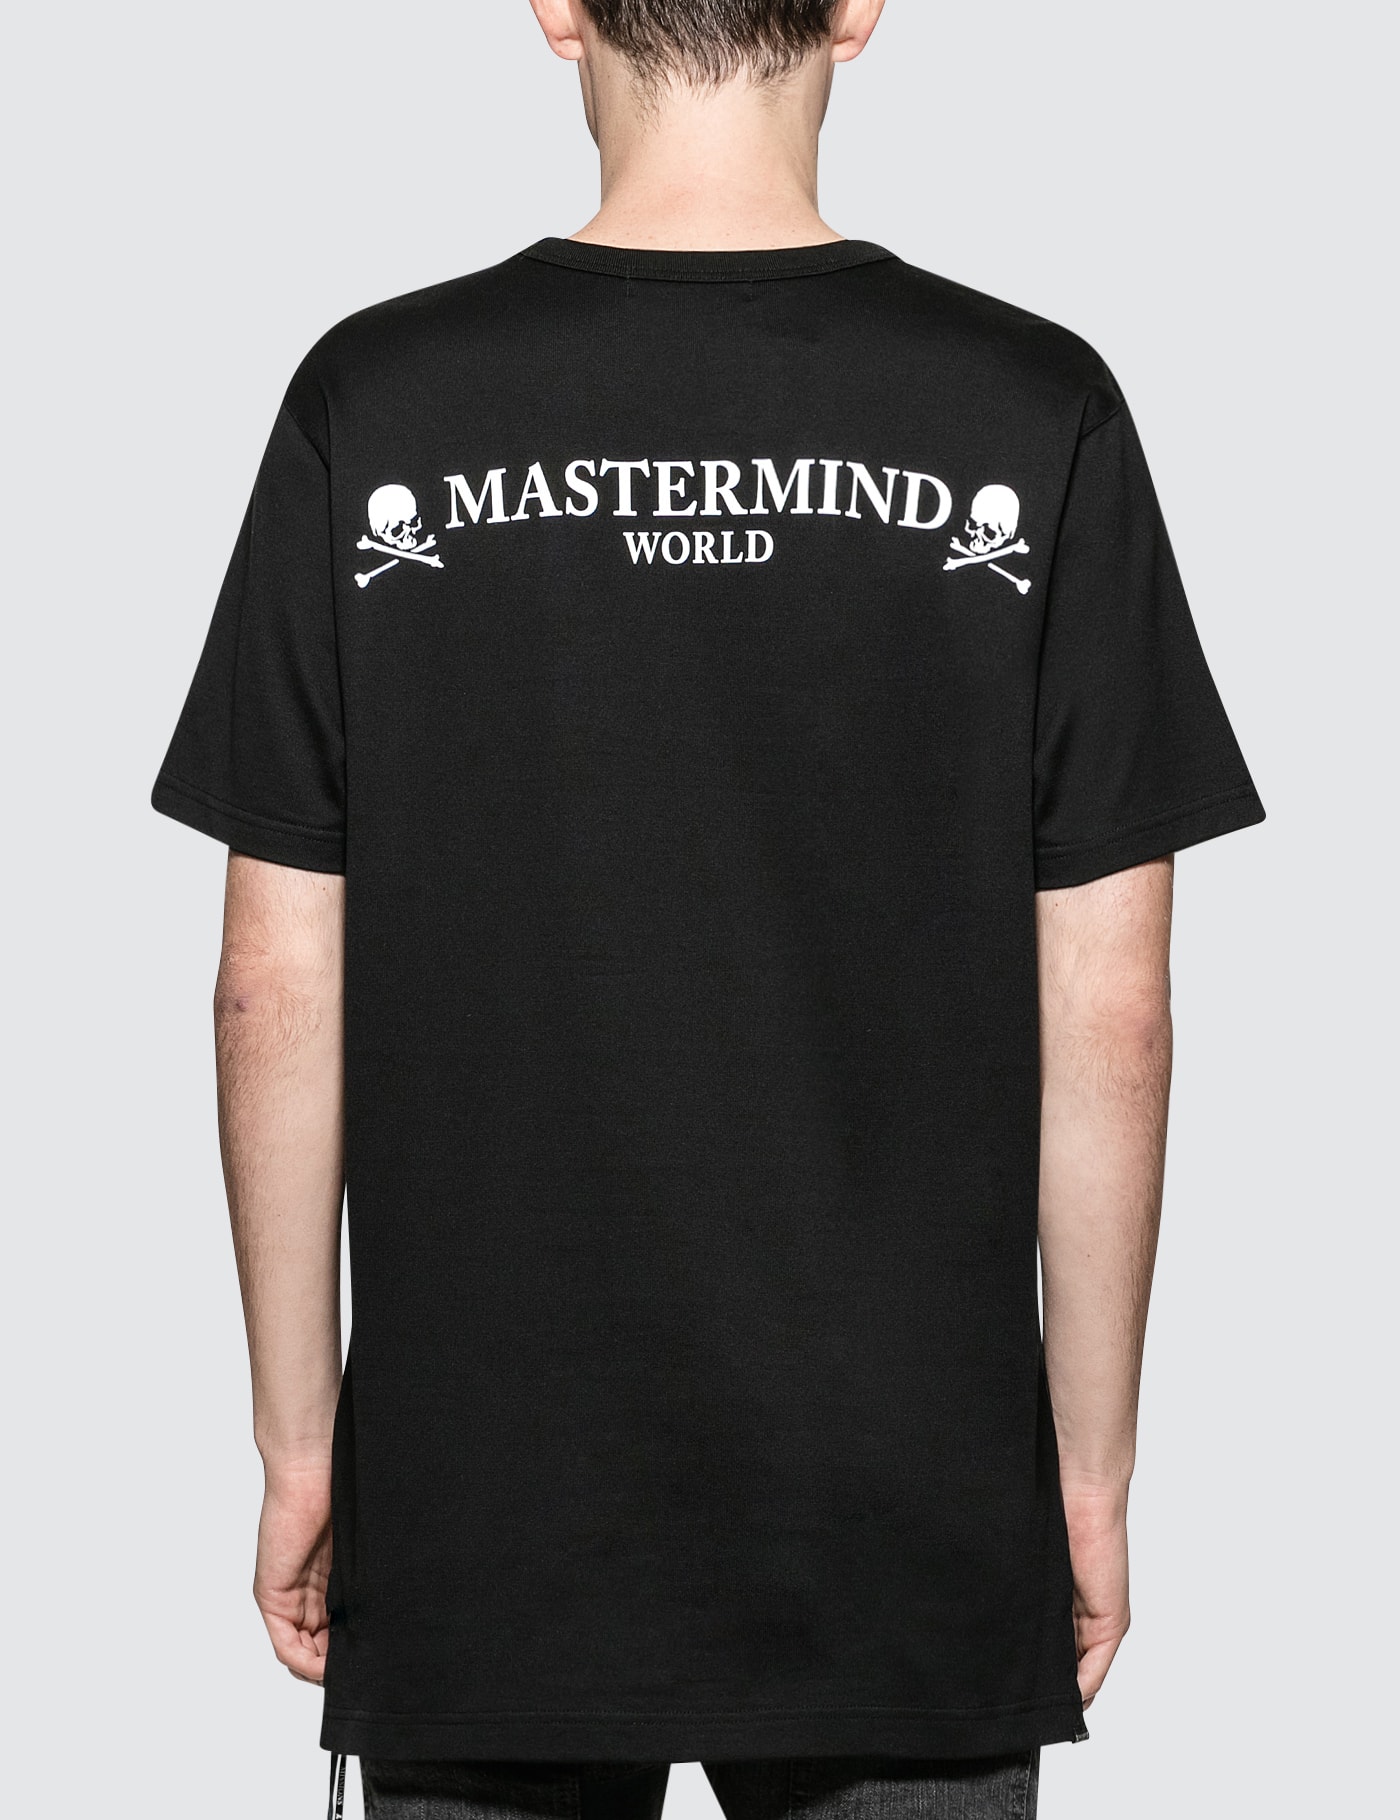 Mastermind World - S/S T-Shirt | HBX